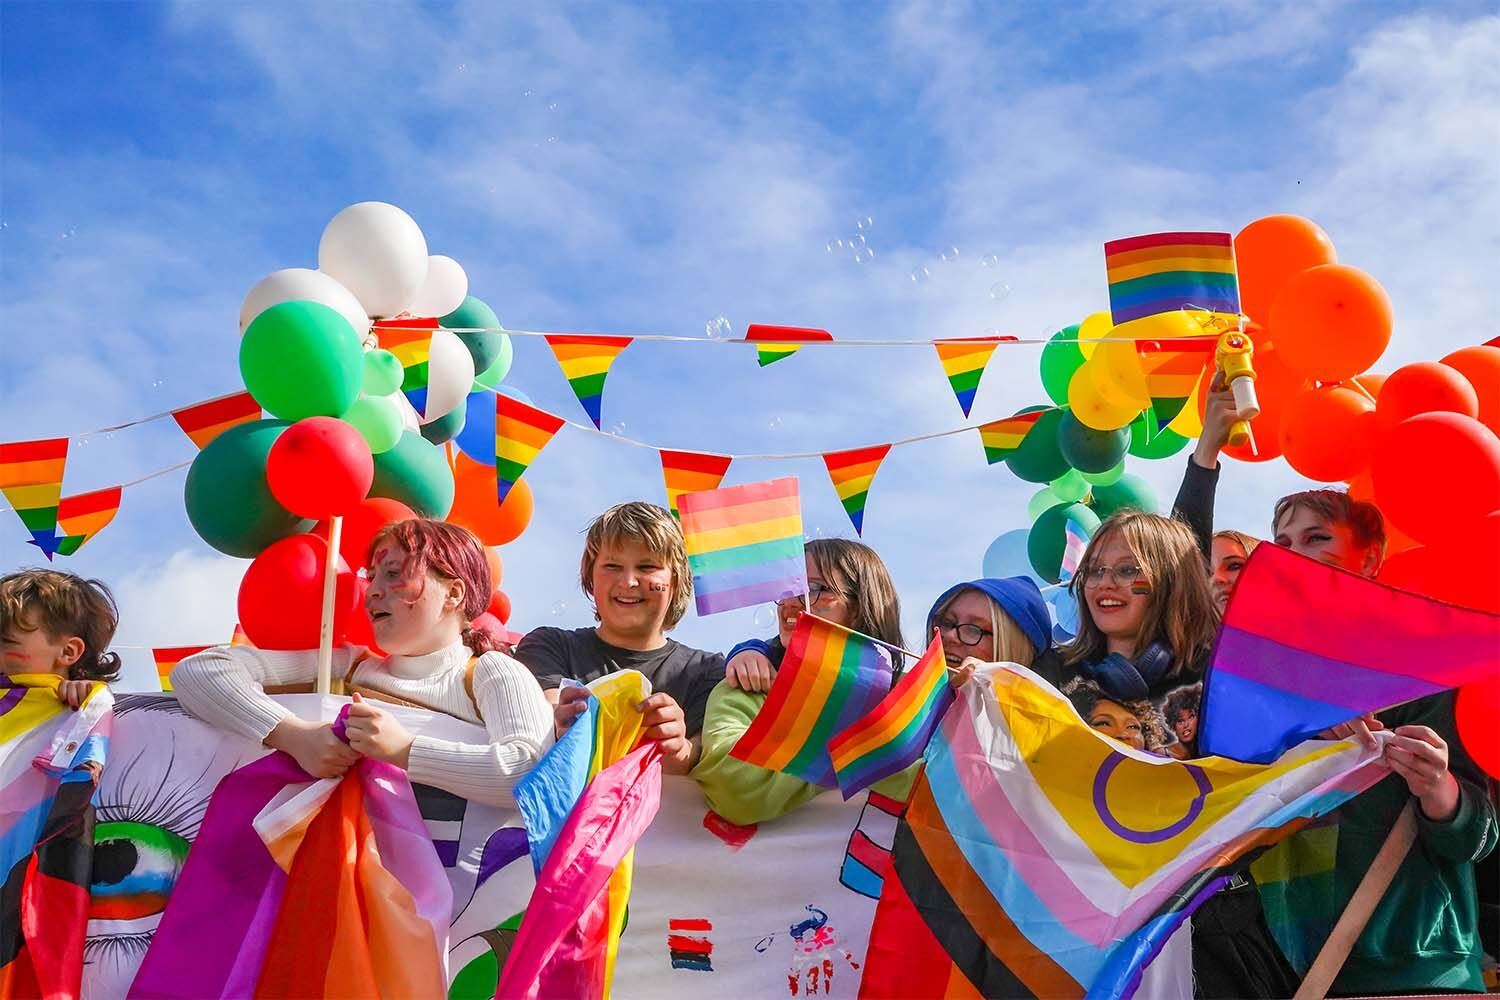 Cheering crowd of children in multicolors with pride flags celebrating Reykjavik pride in Iceland.